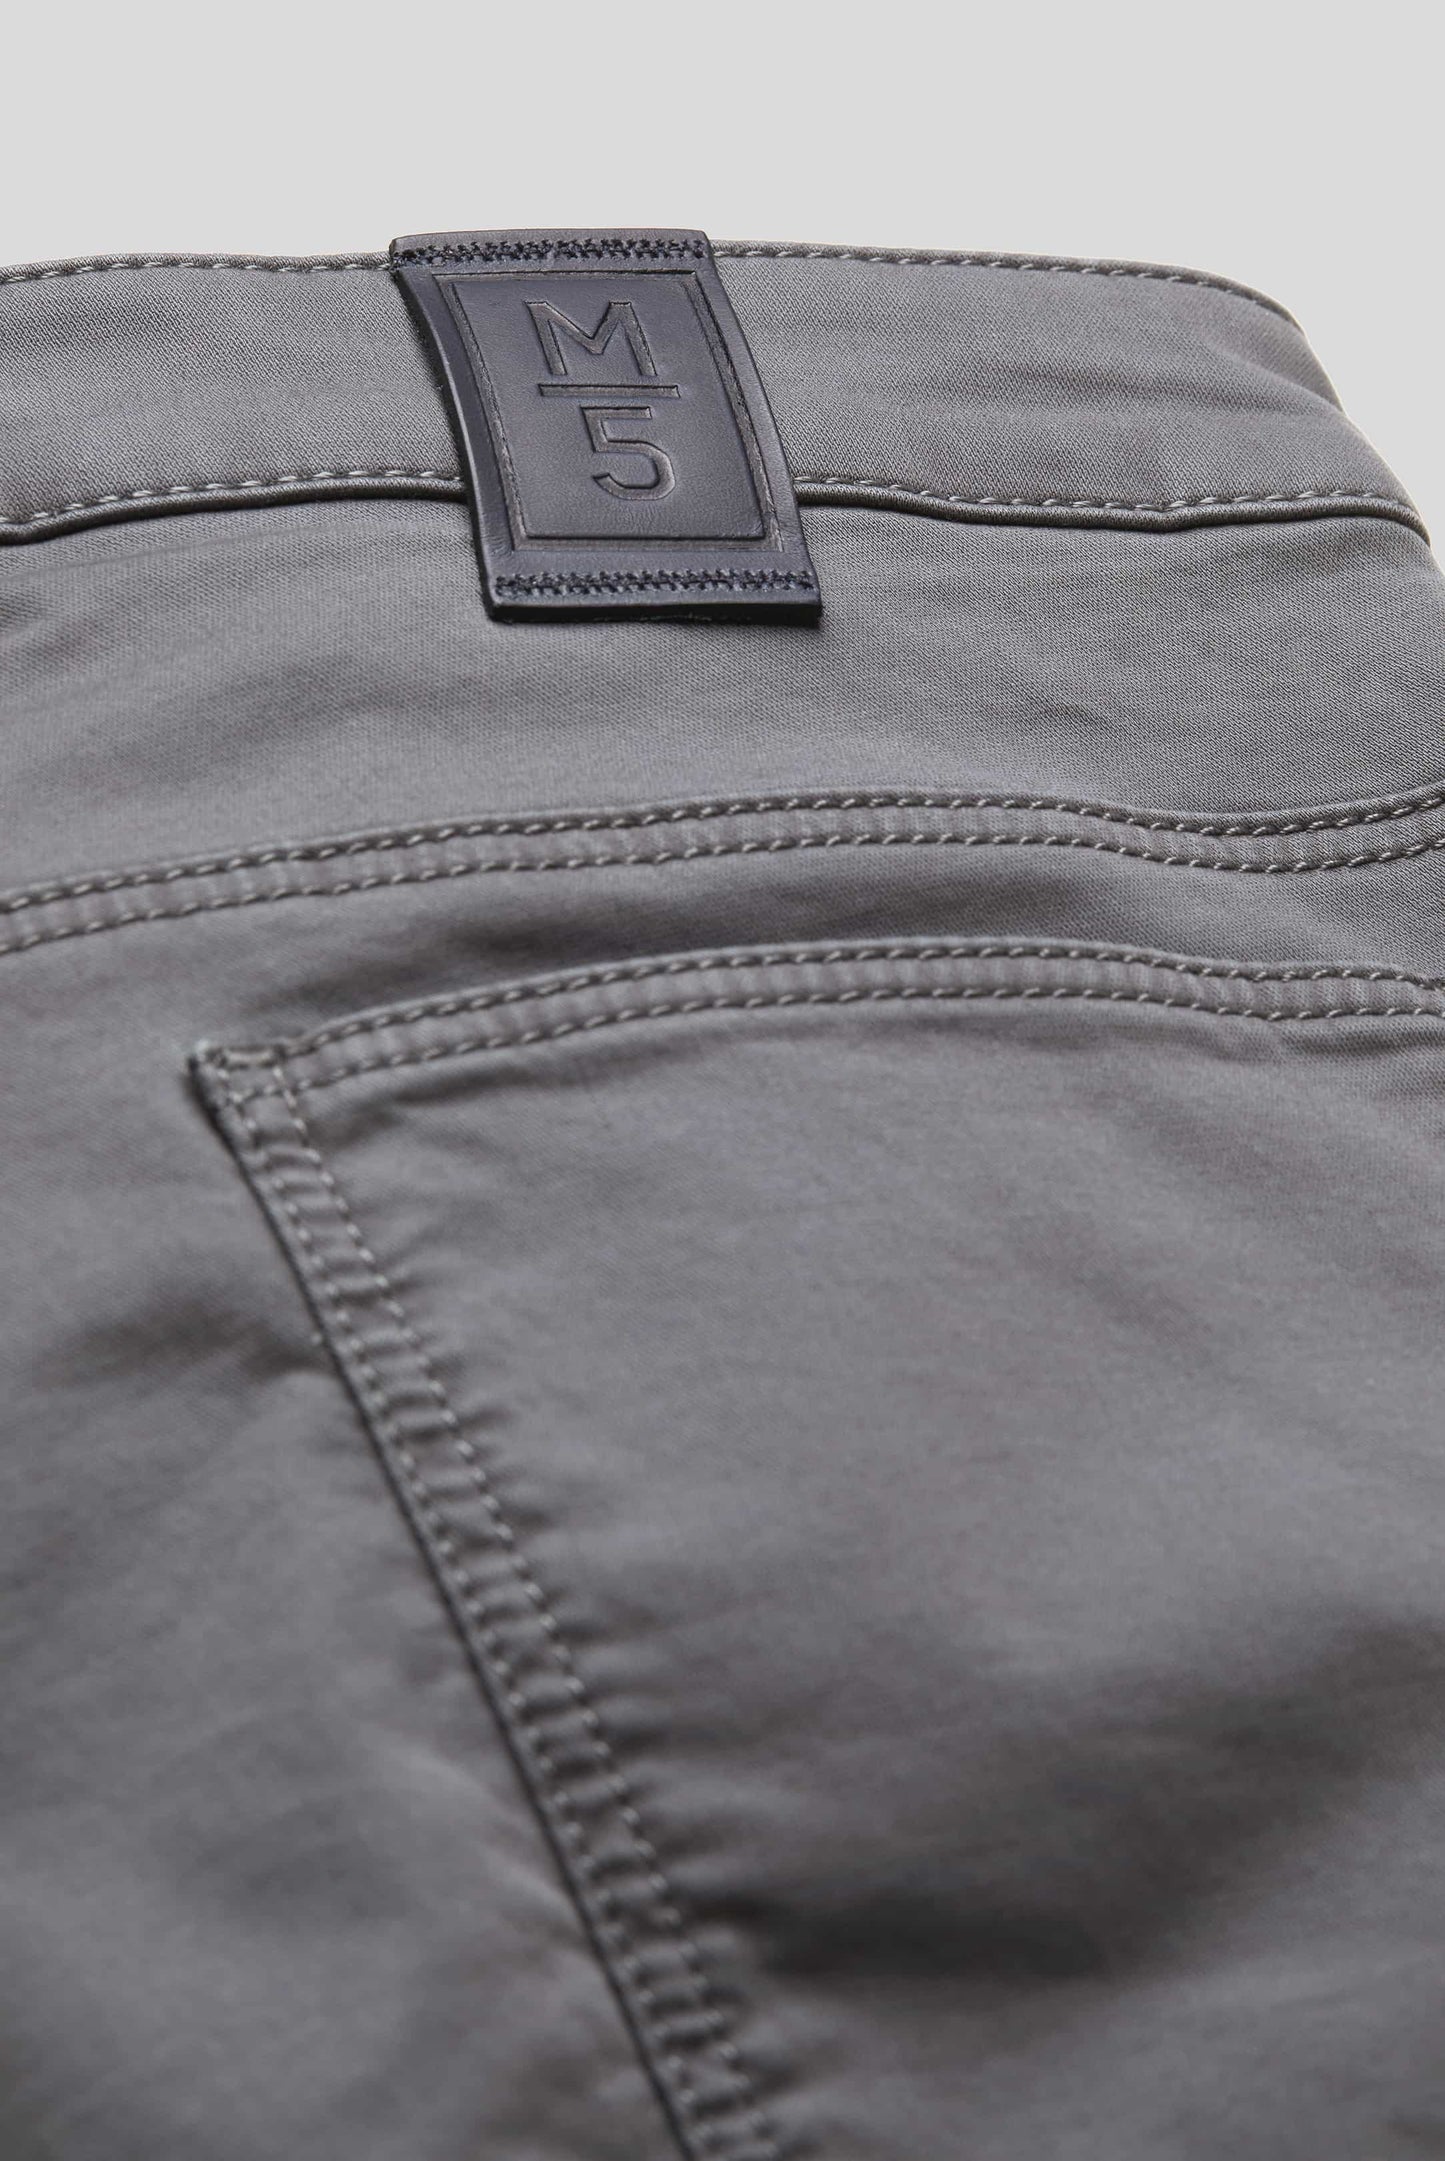 M5 Grey 5 Pocket Slim Fit Chinos